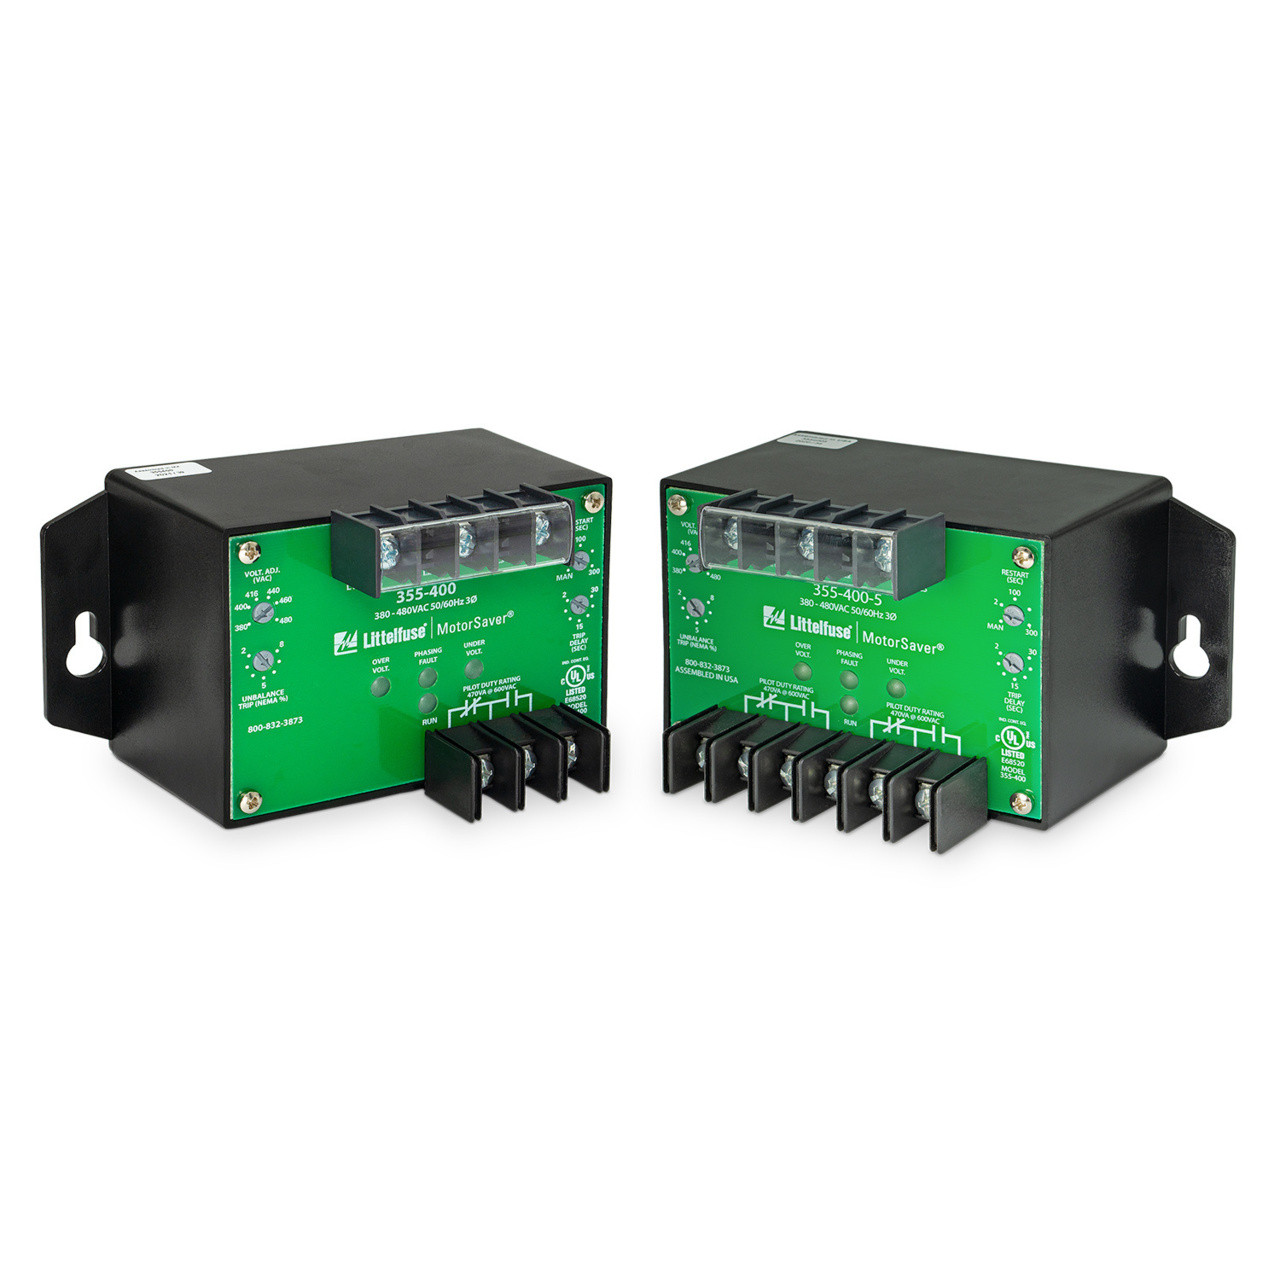 Littelfuse-Symcom 355400 Voltage Monitor Relays